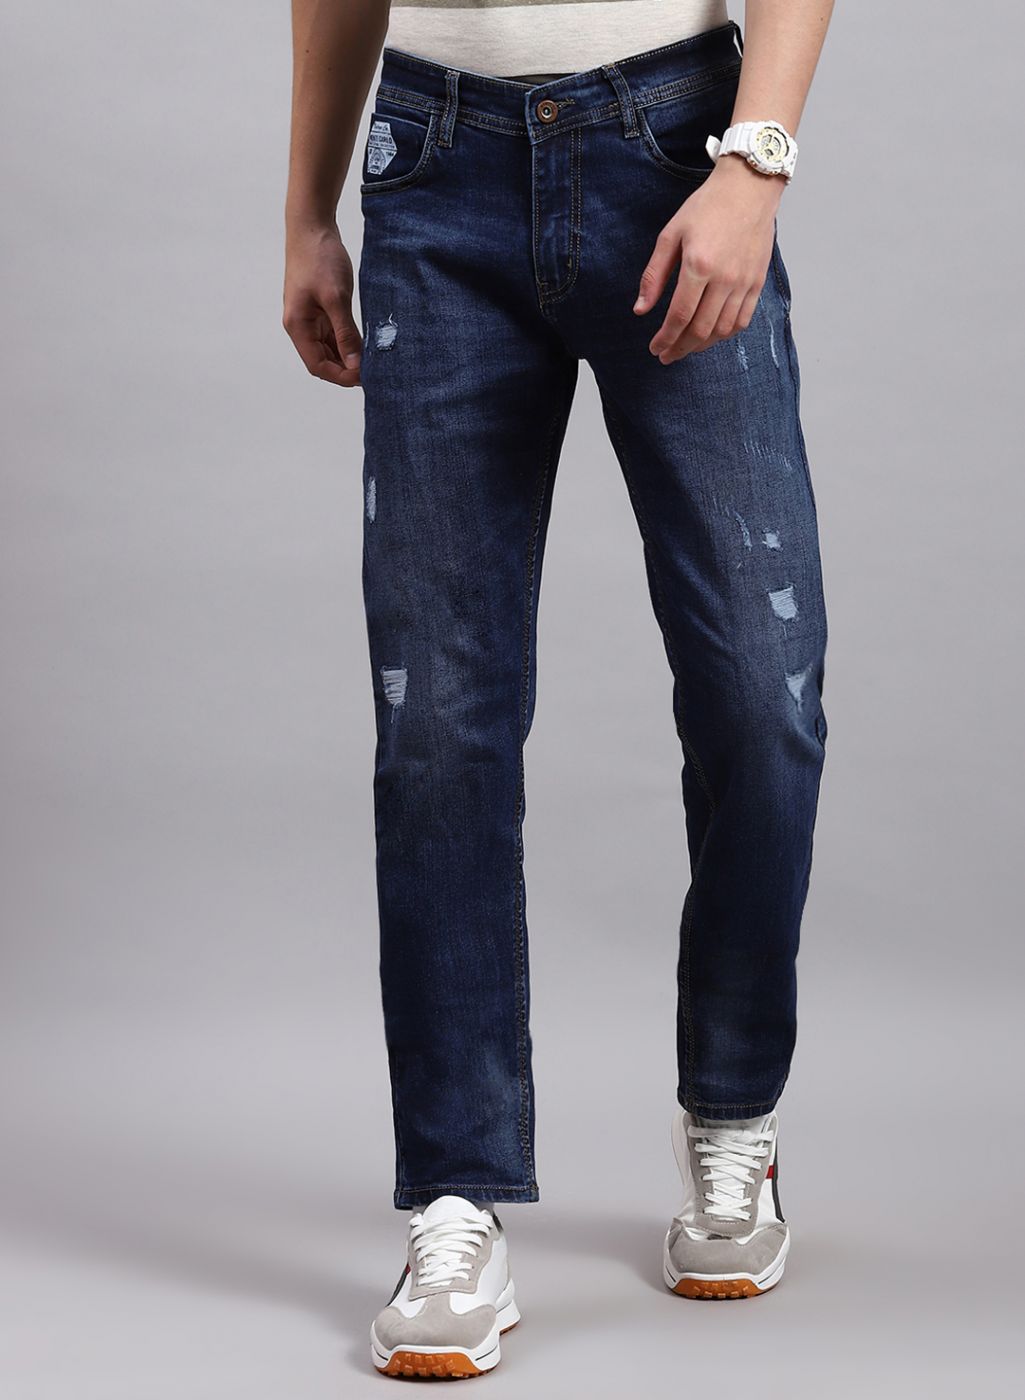 Men's Jeans & Pants - Denim, Ripped Jeans & More | RADPRESENT